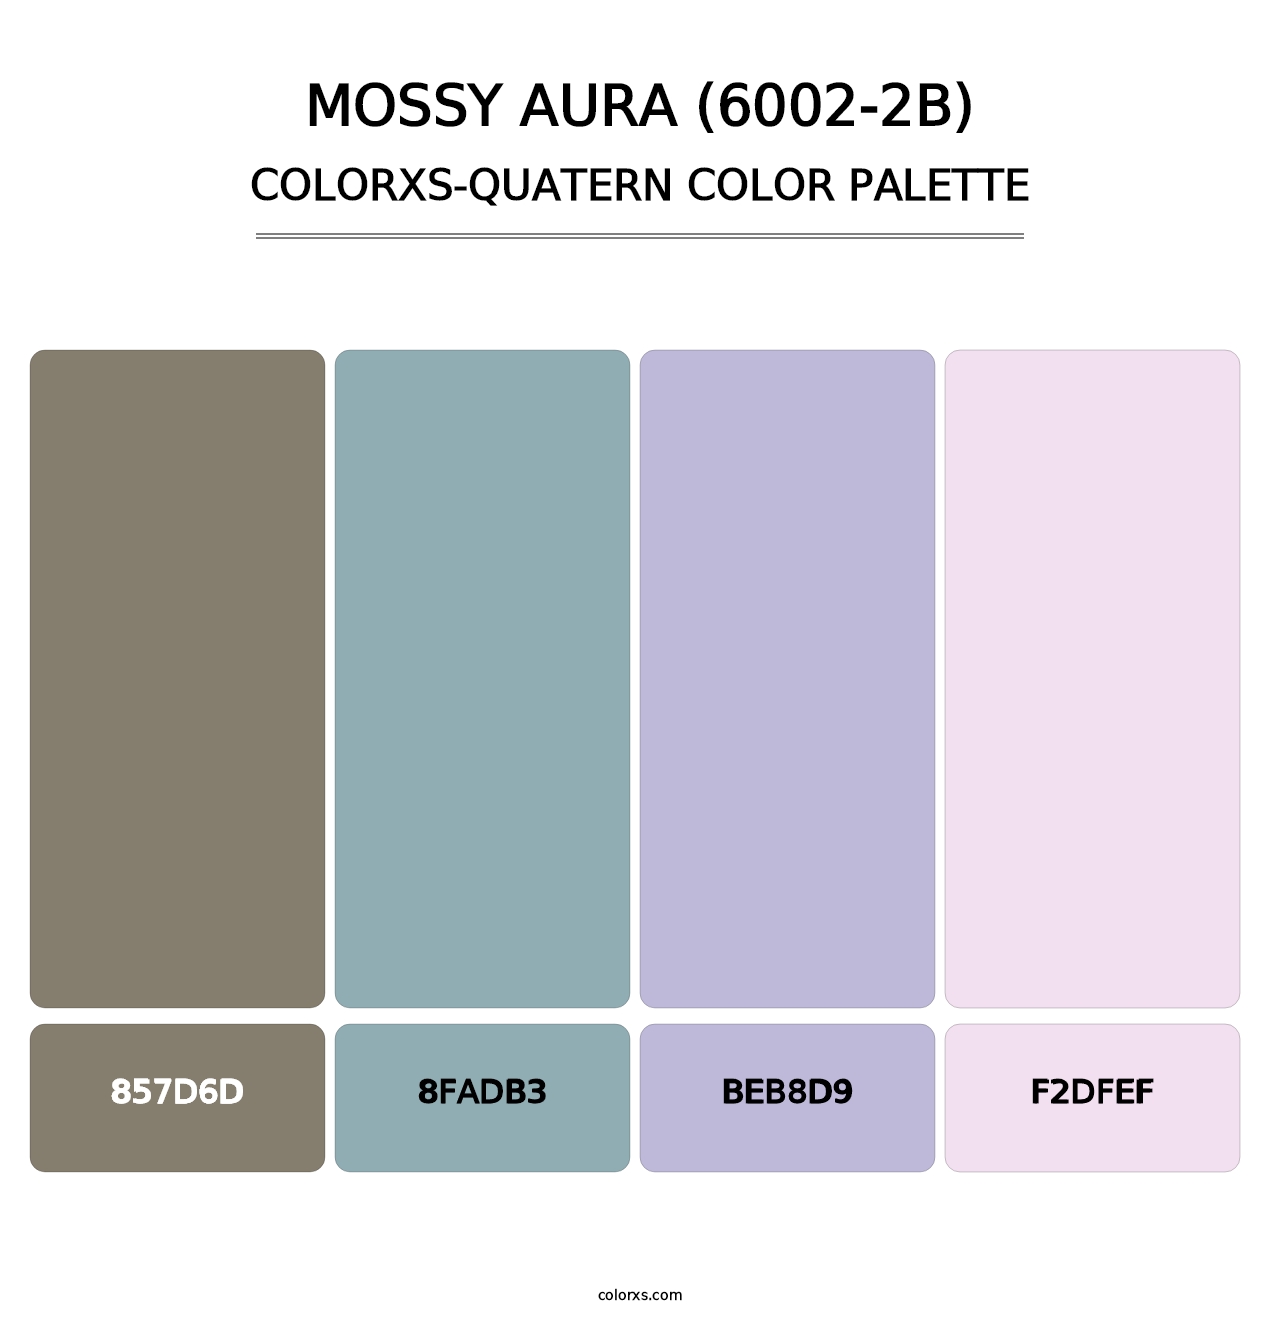 Mossy Aura (6002-2B) - Colorxs Quatern Palette